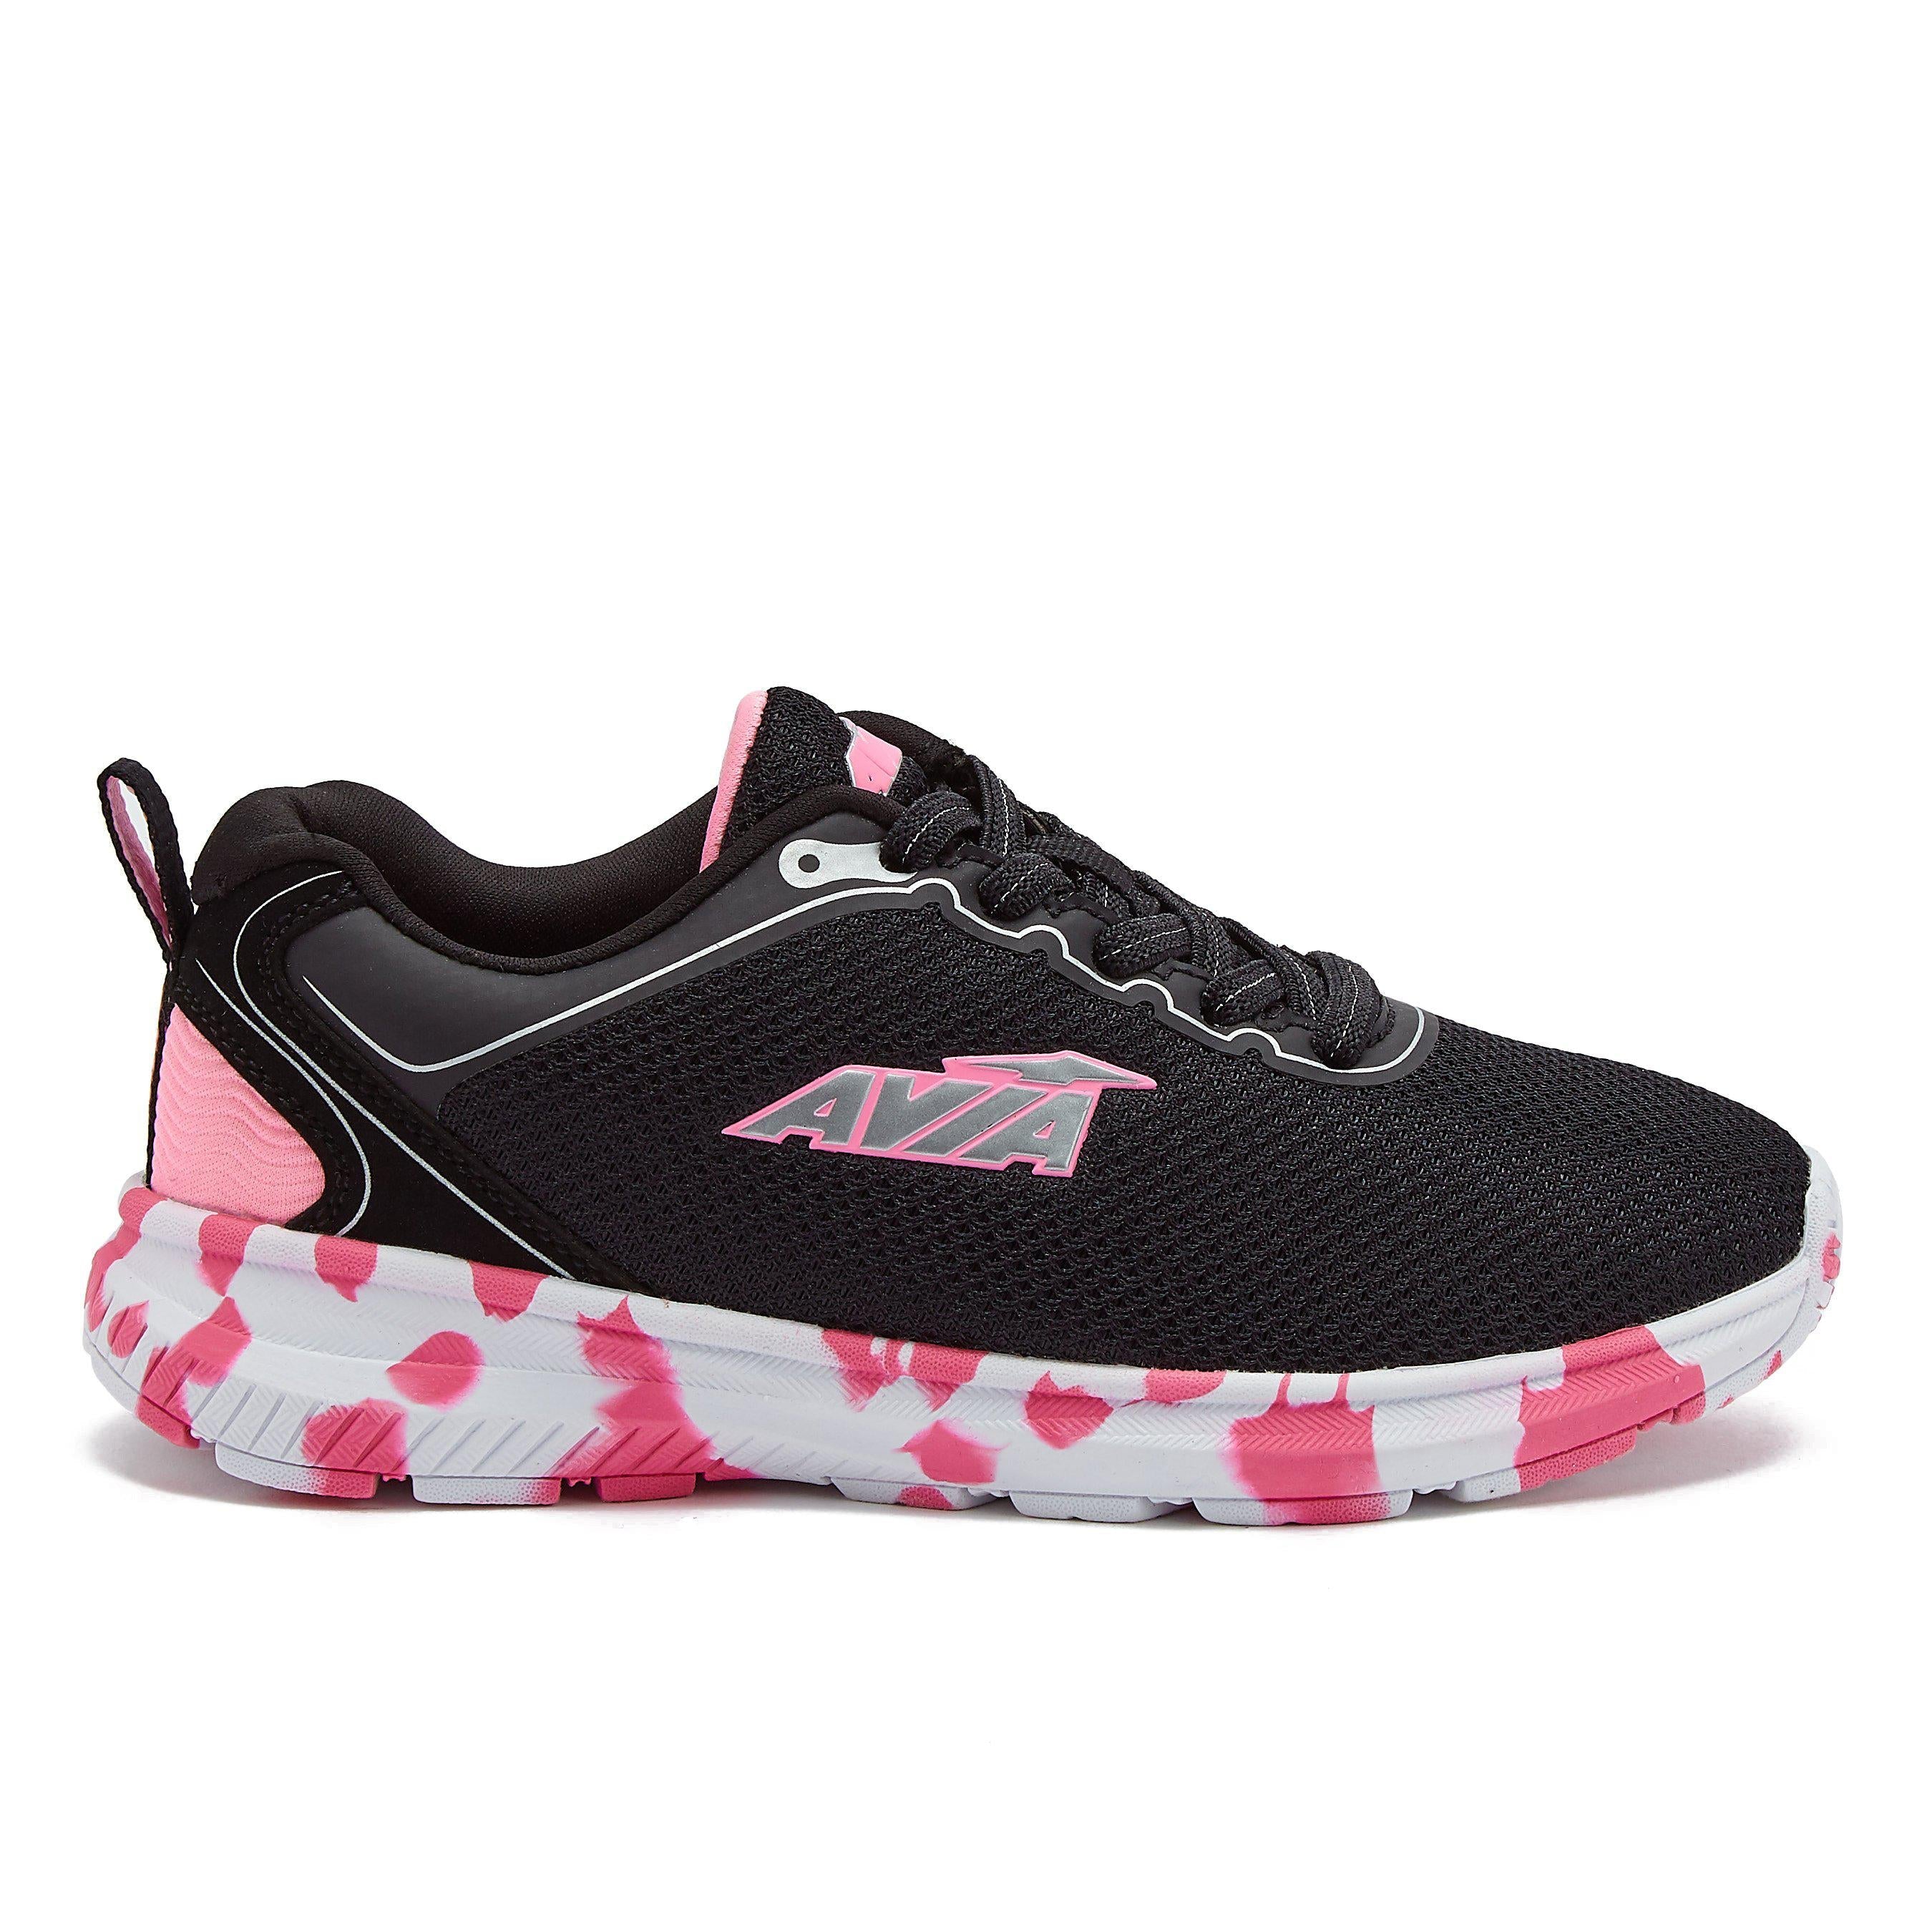 Avia gray and pink sneakers  Pink sneakers, Sneakers, Avia